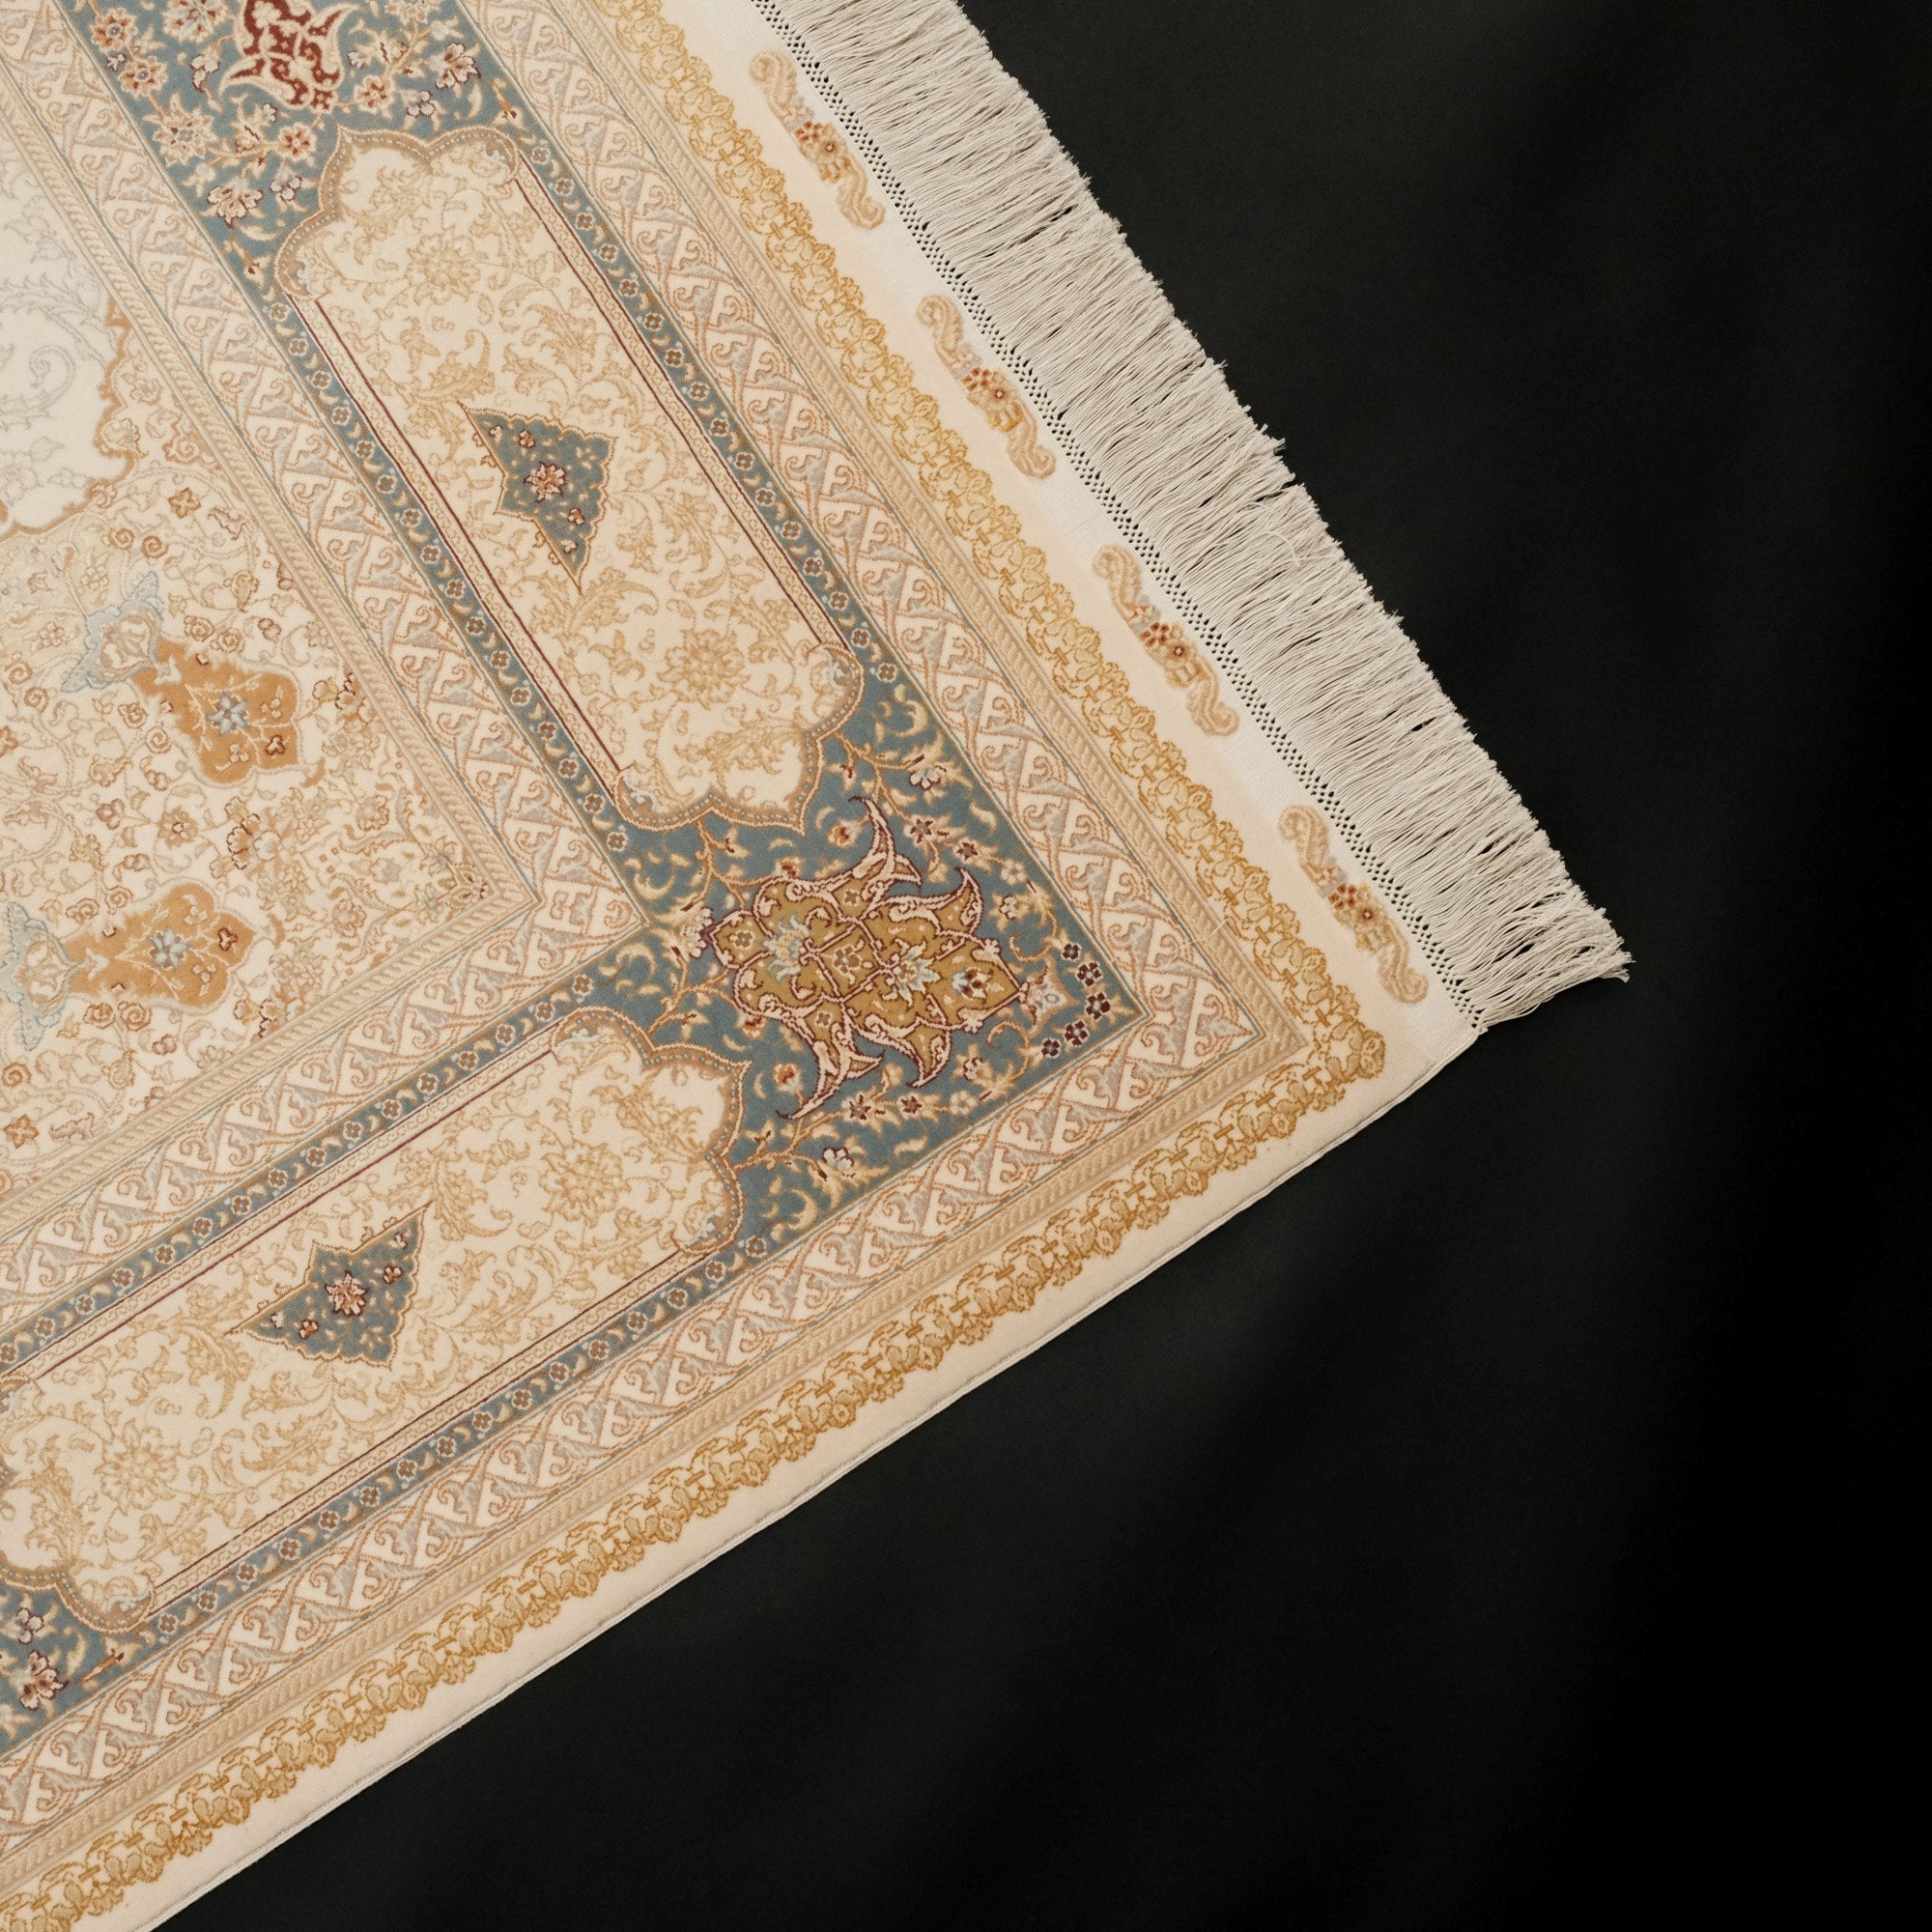 Zâde Series Frame Patterned Cream Hand-Woven Carpet